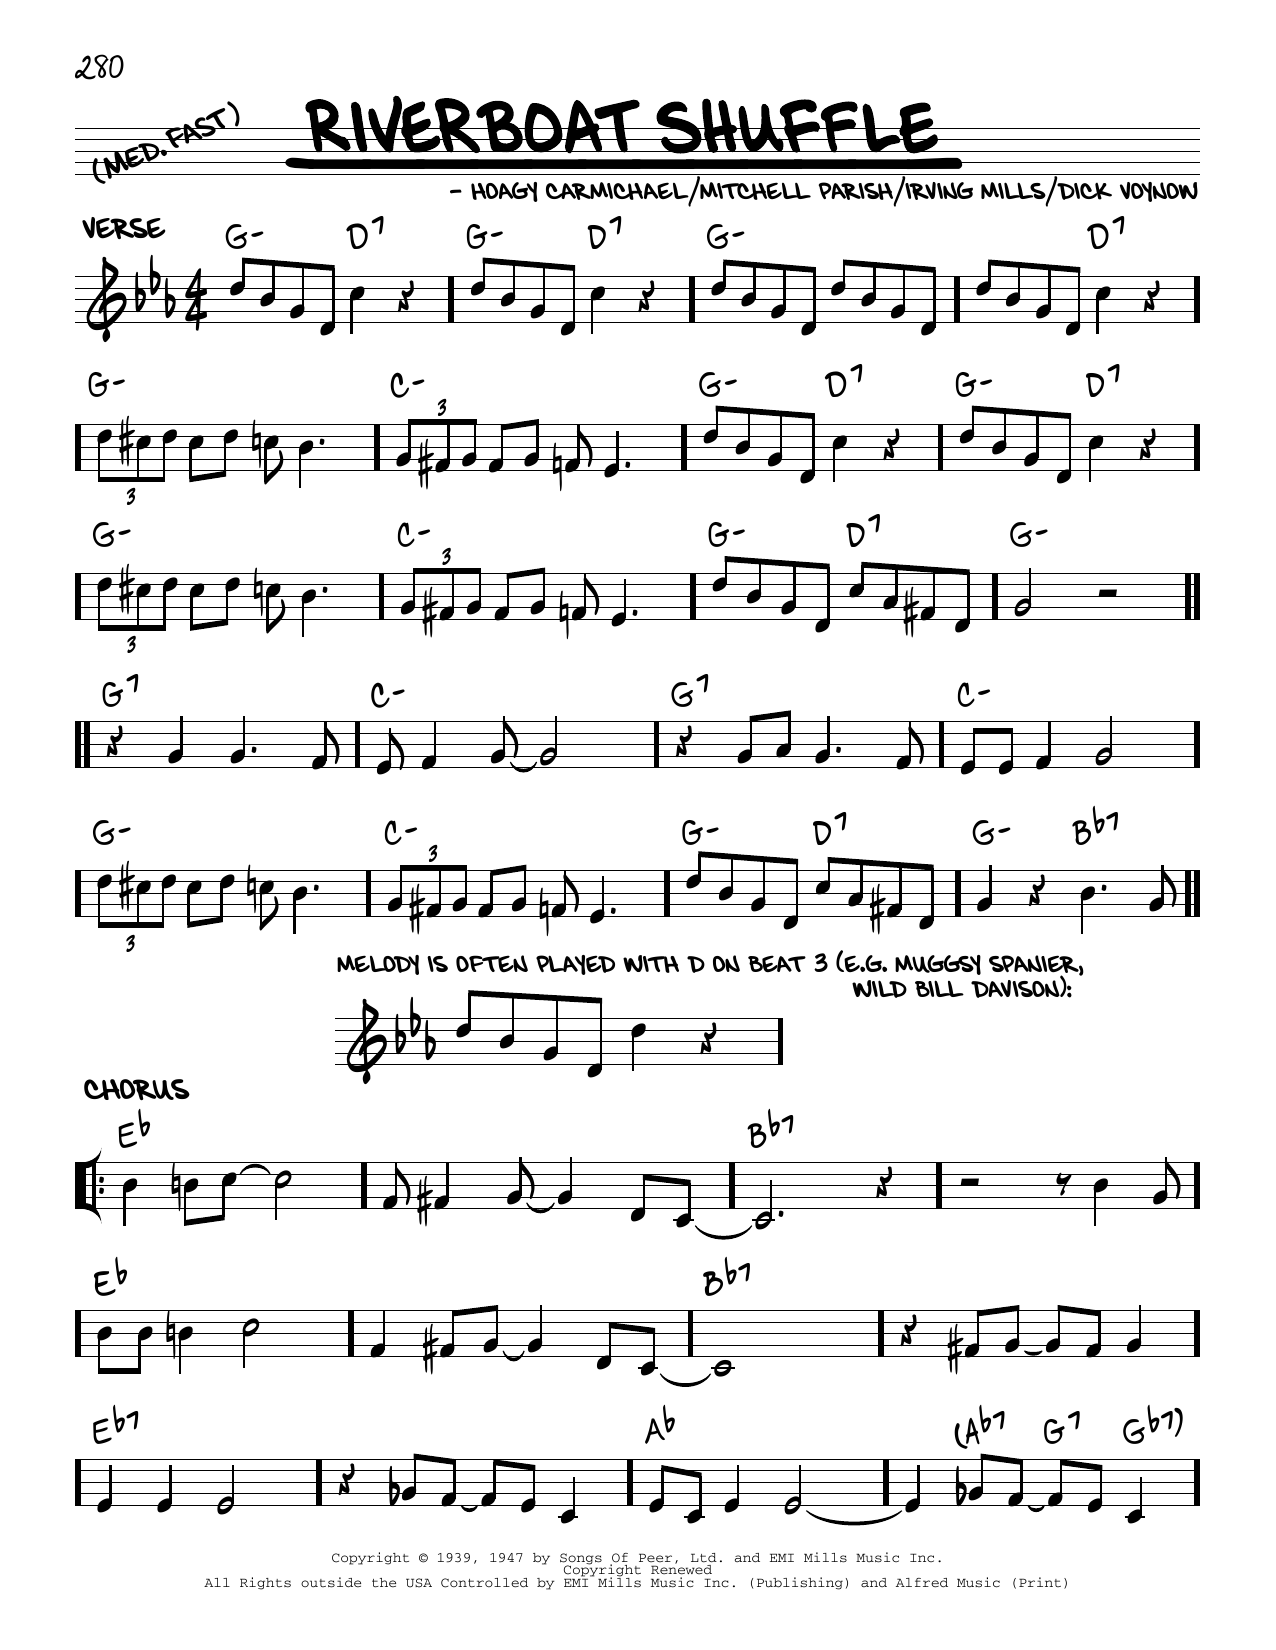 Bix Beiderbecke Riverboat Shuffle (arr. Robert Rawlins) Sheet Music Notes & Chords for Real Book – Melody, Lyrics & Chords - Download or Print PDF